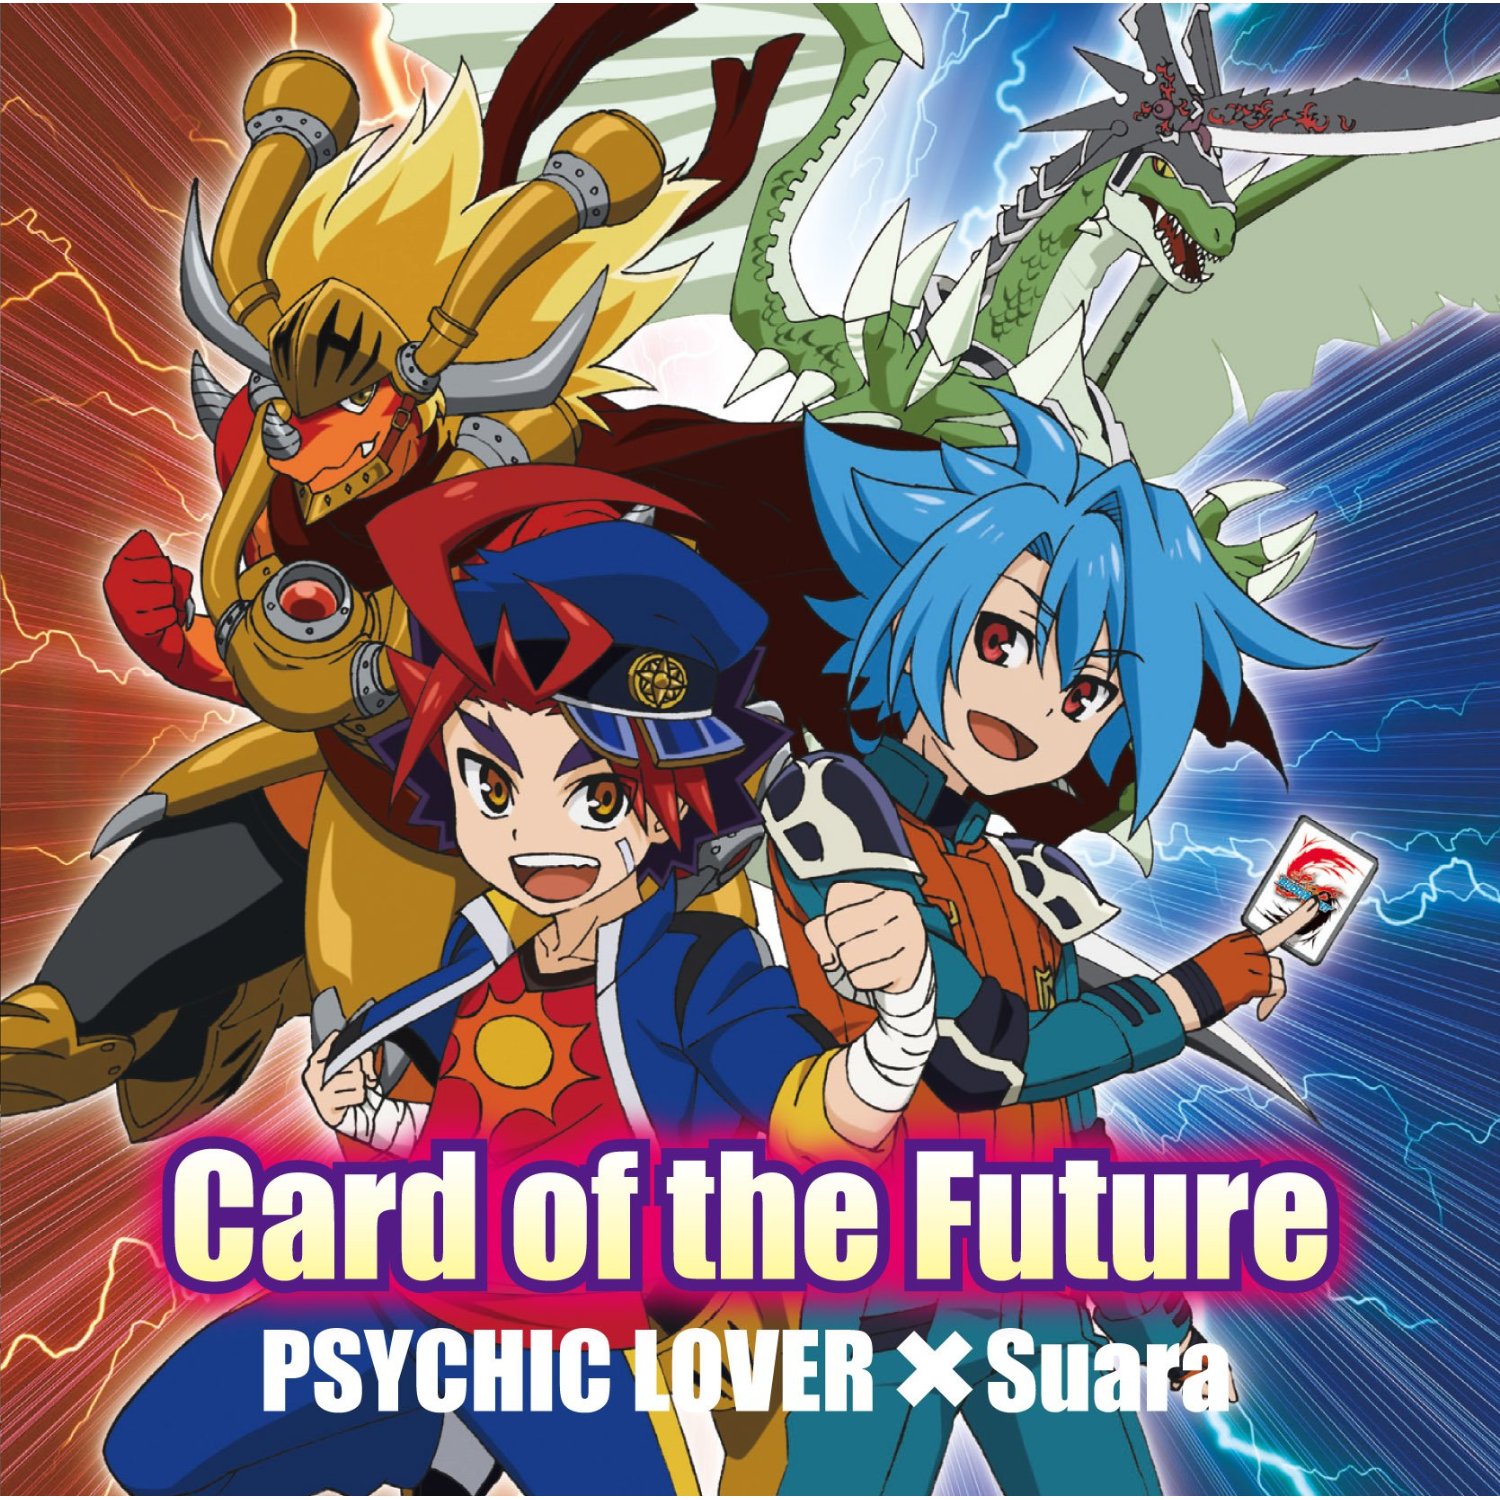 Anime Like Future Card Buddyfight